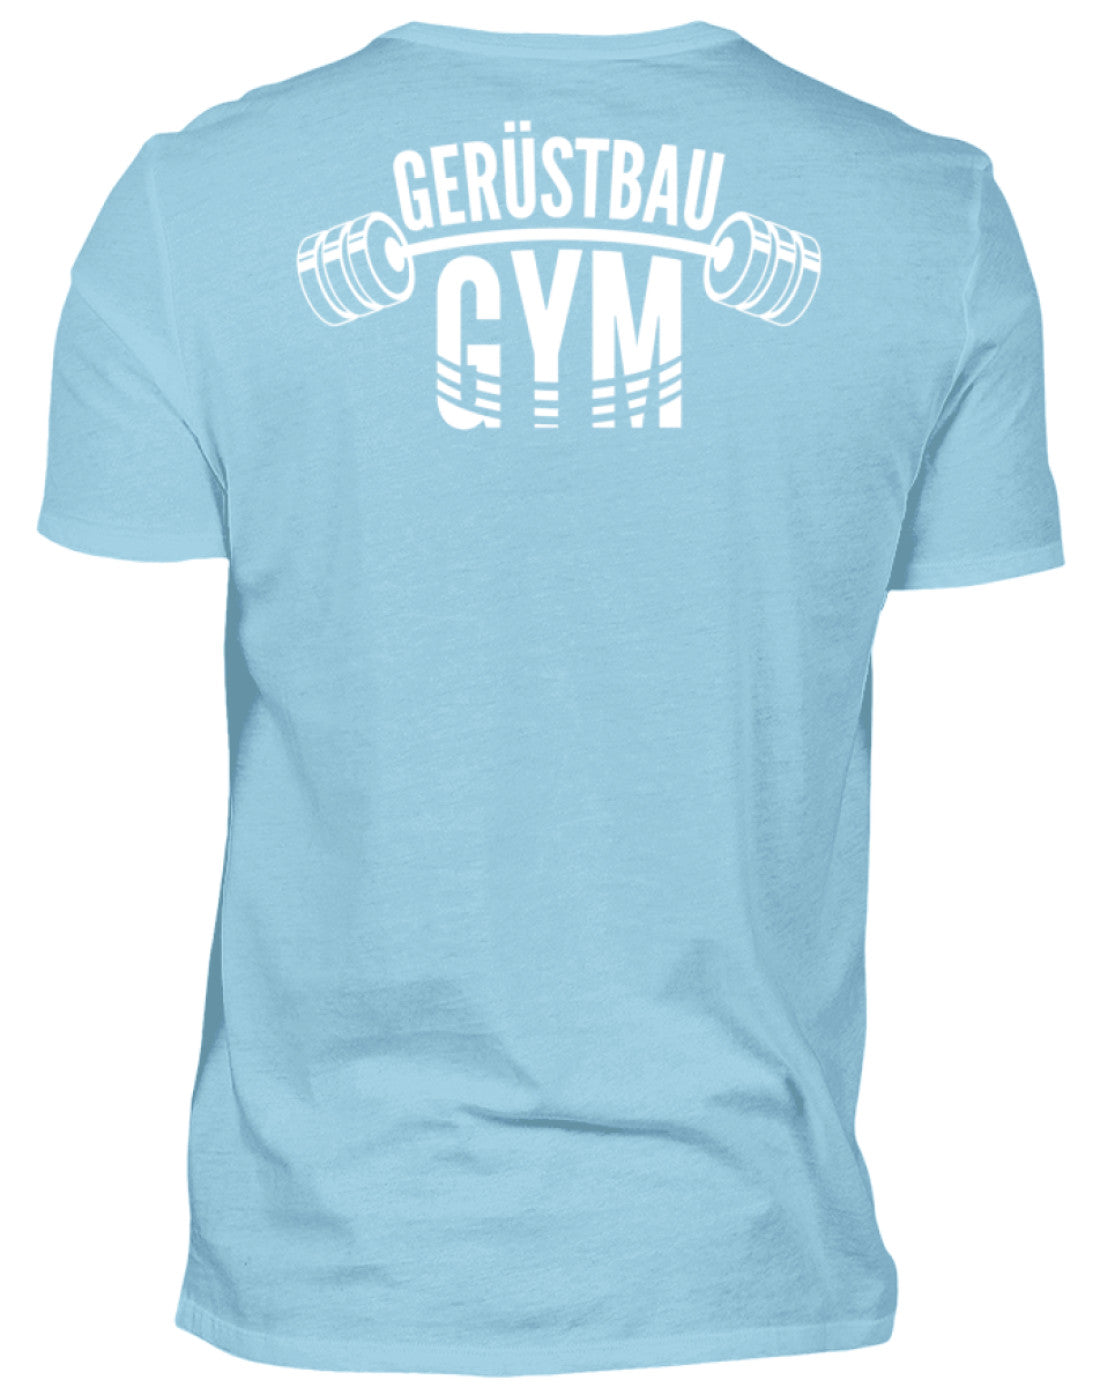 Gerüstbauer T-Shirt Gerüstbau GYM €24.95 Gerüstbauer - Shop >>